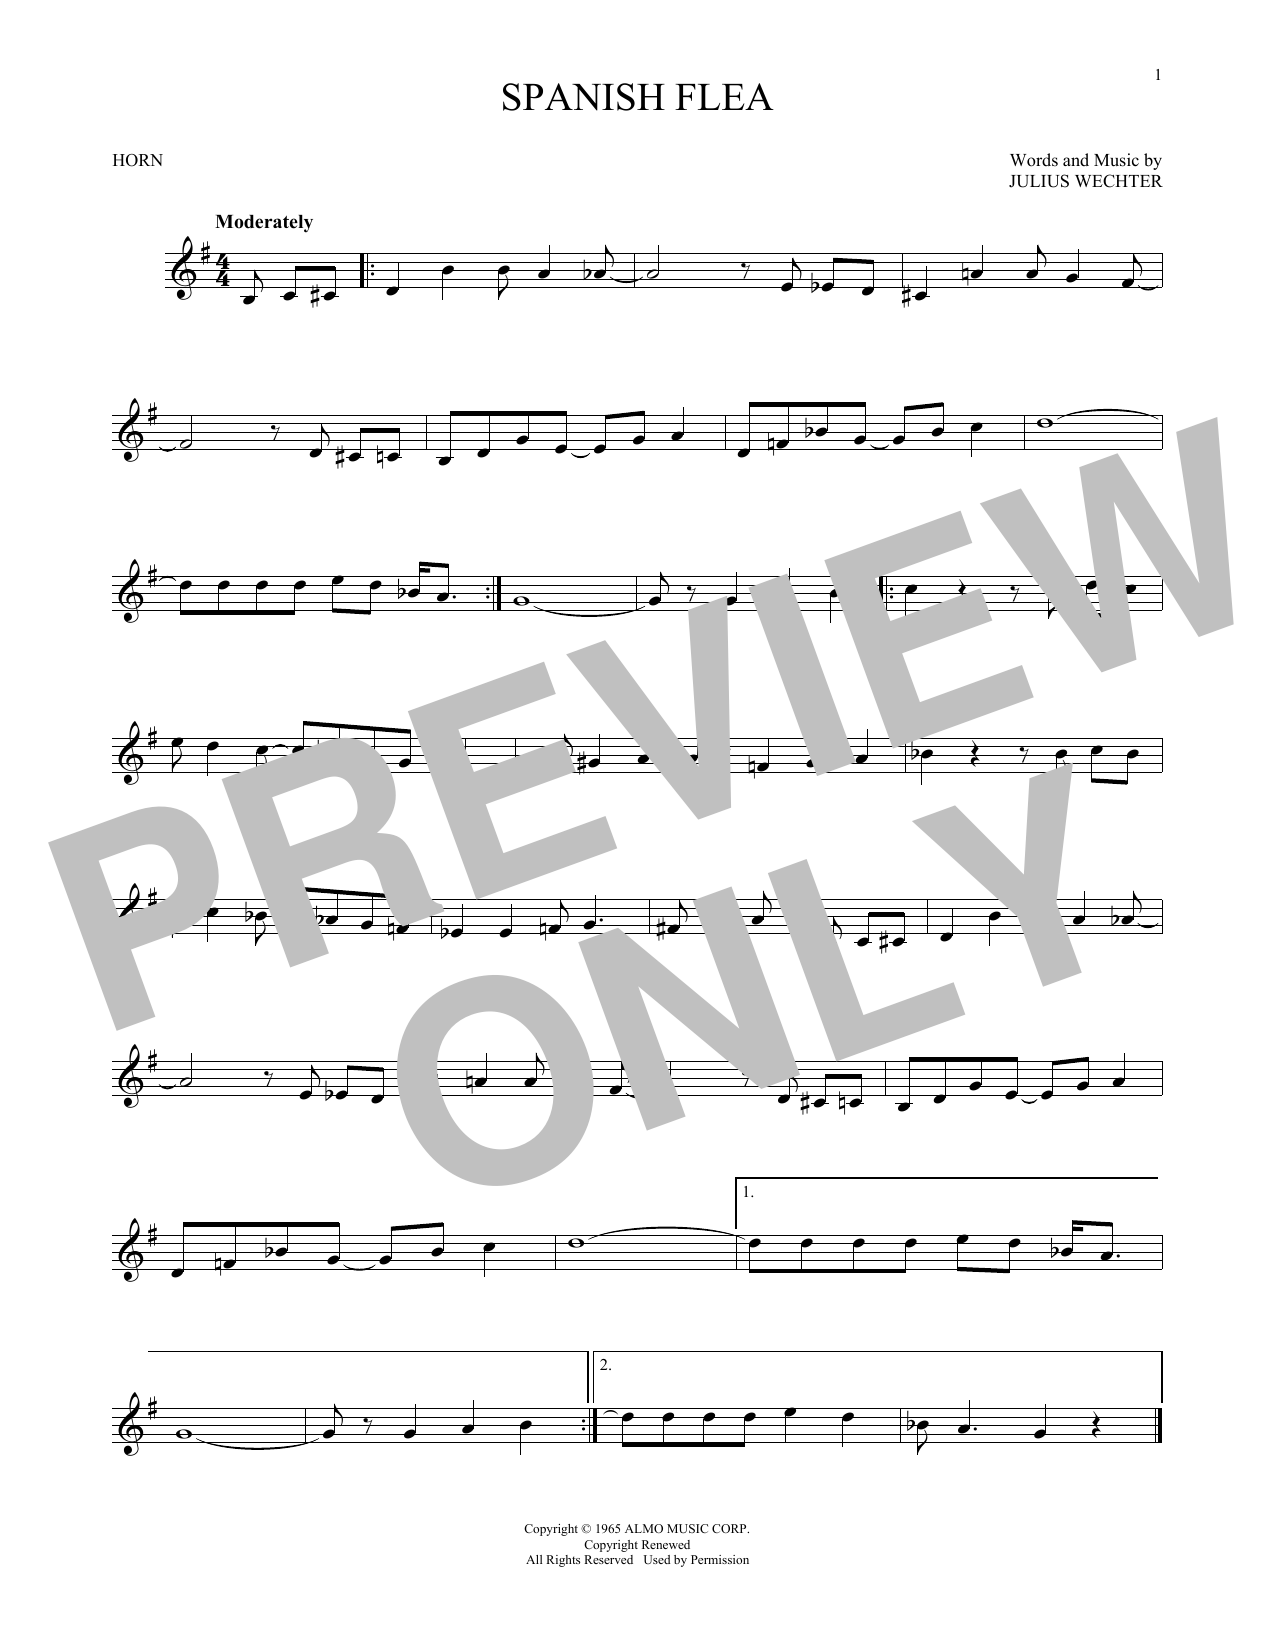 Herb Alpert & The Tijuana Brass Band Spanish Flea Sheet Music Notes & Chords for Alto Saxophone - Download or Print PDF